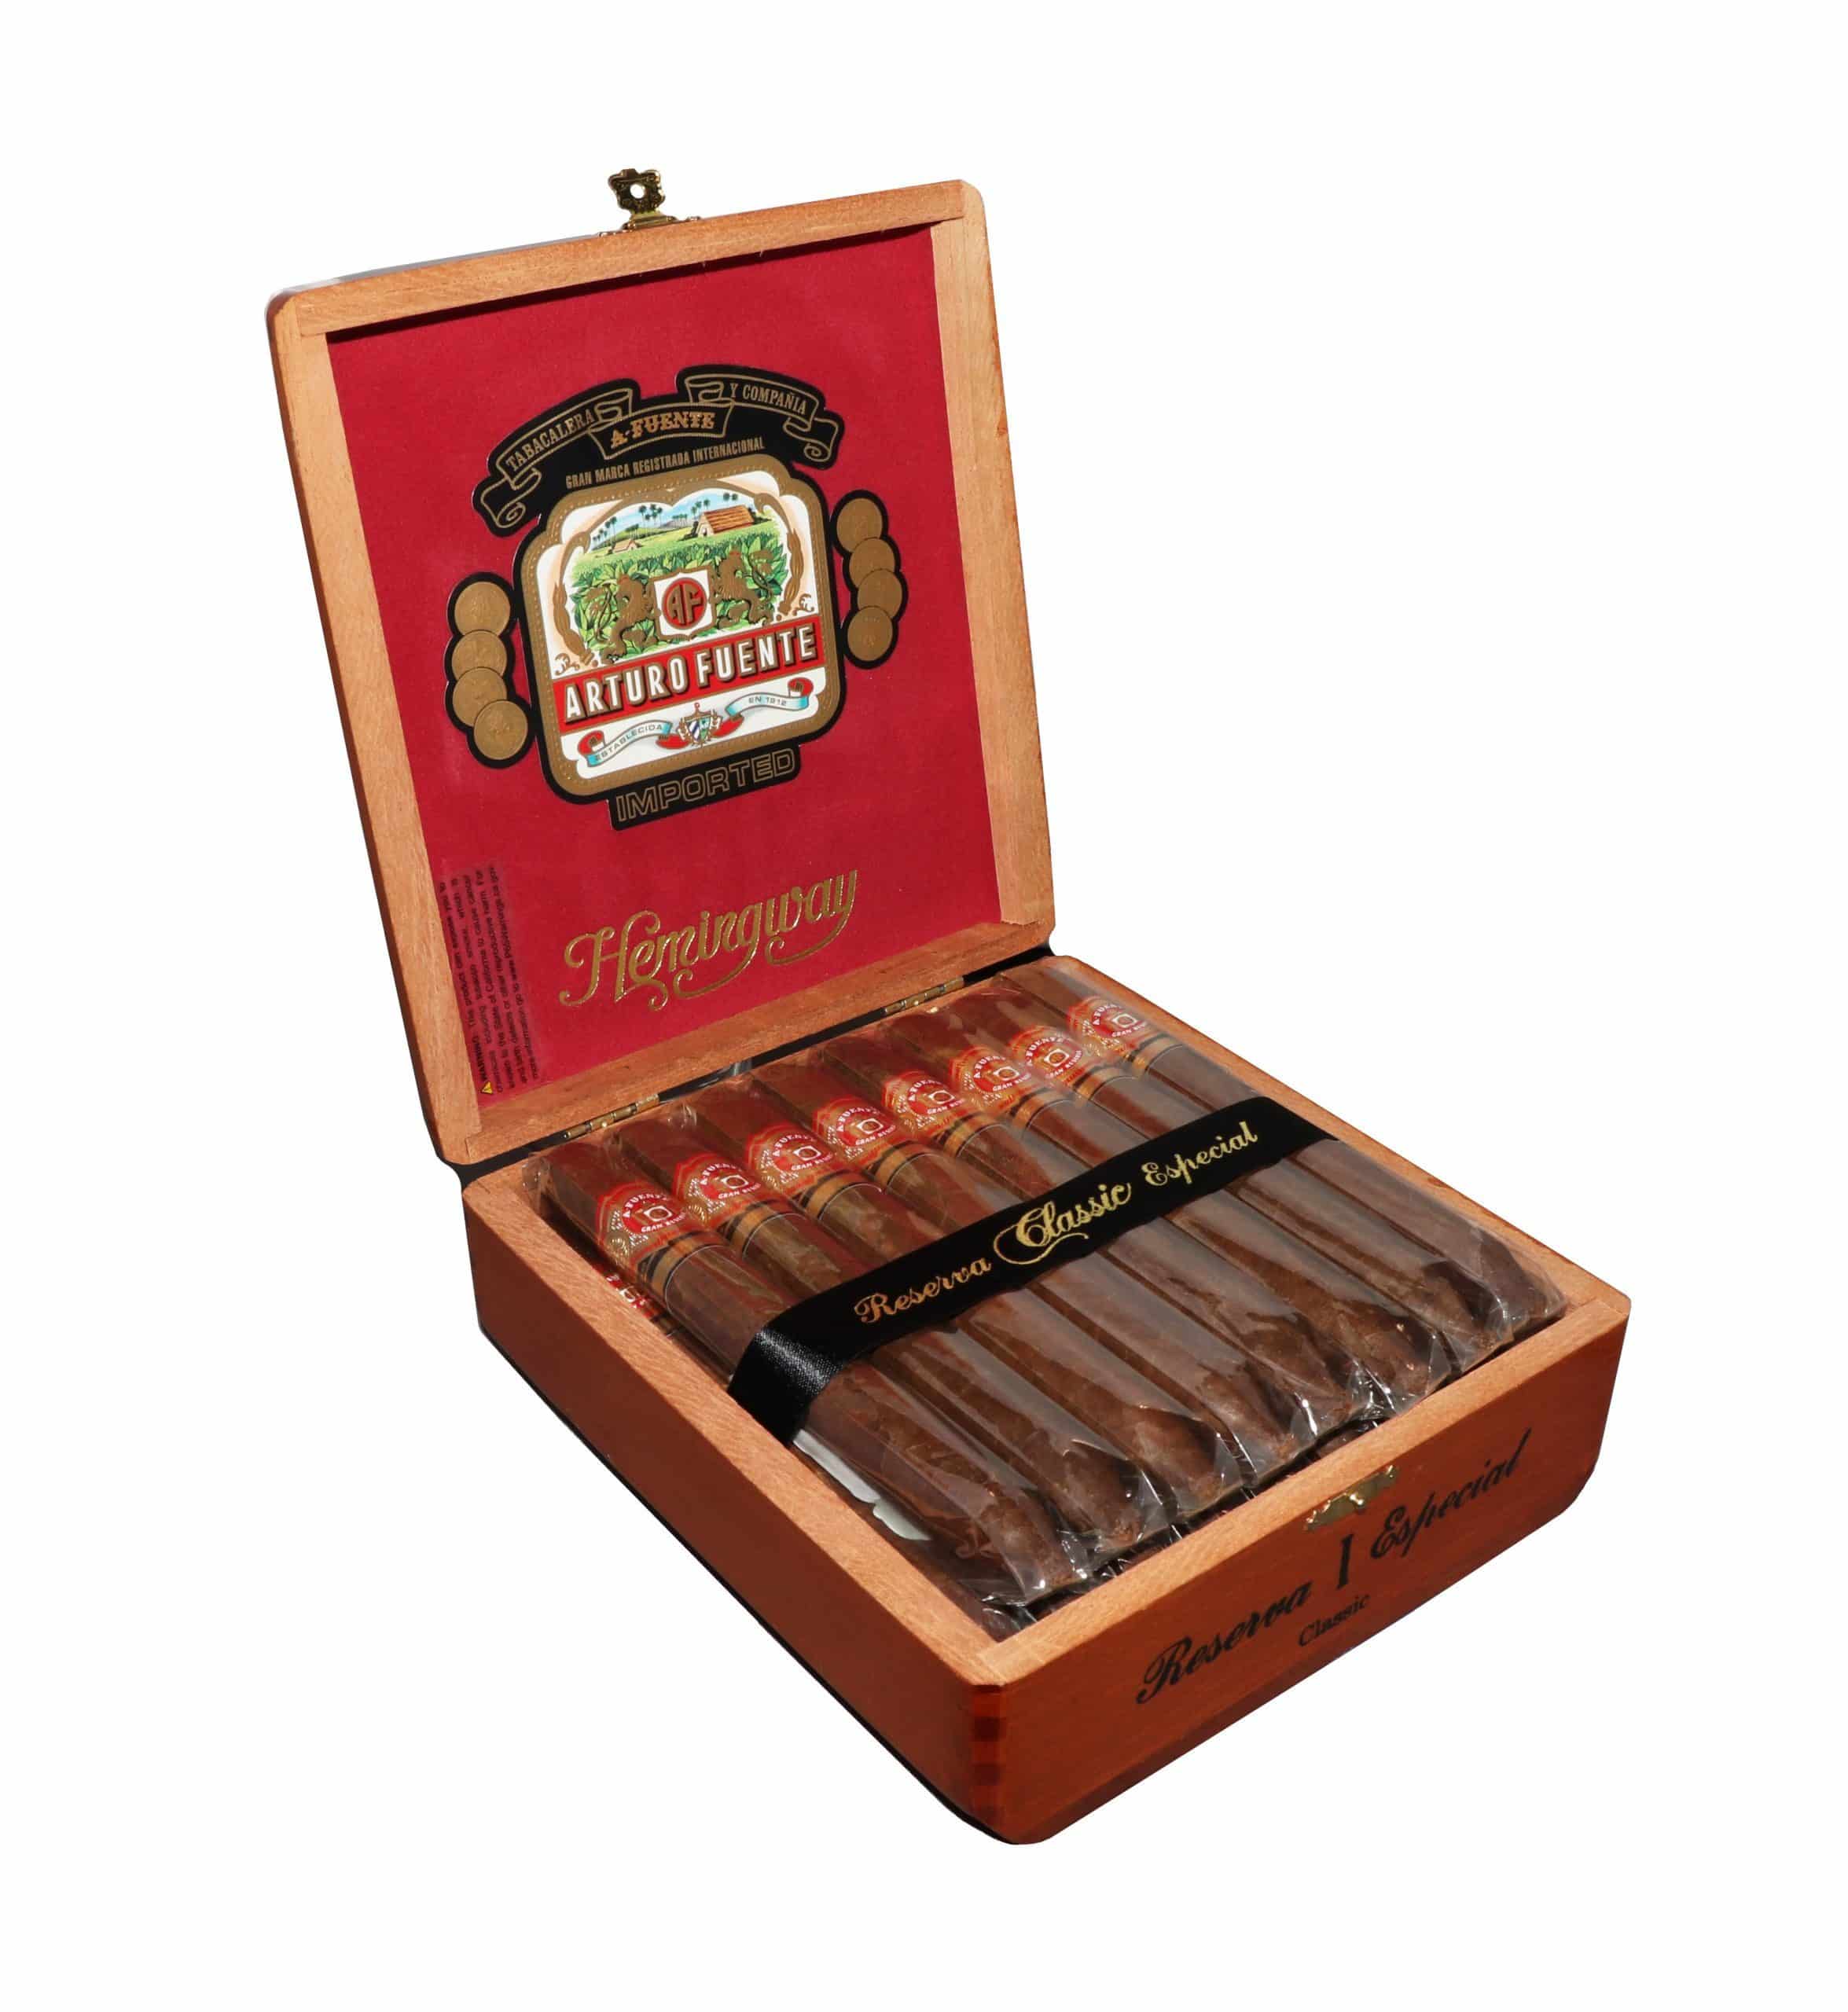 Open box of 25 count Arturo Fuente Hemingway Classic cigars